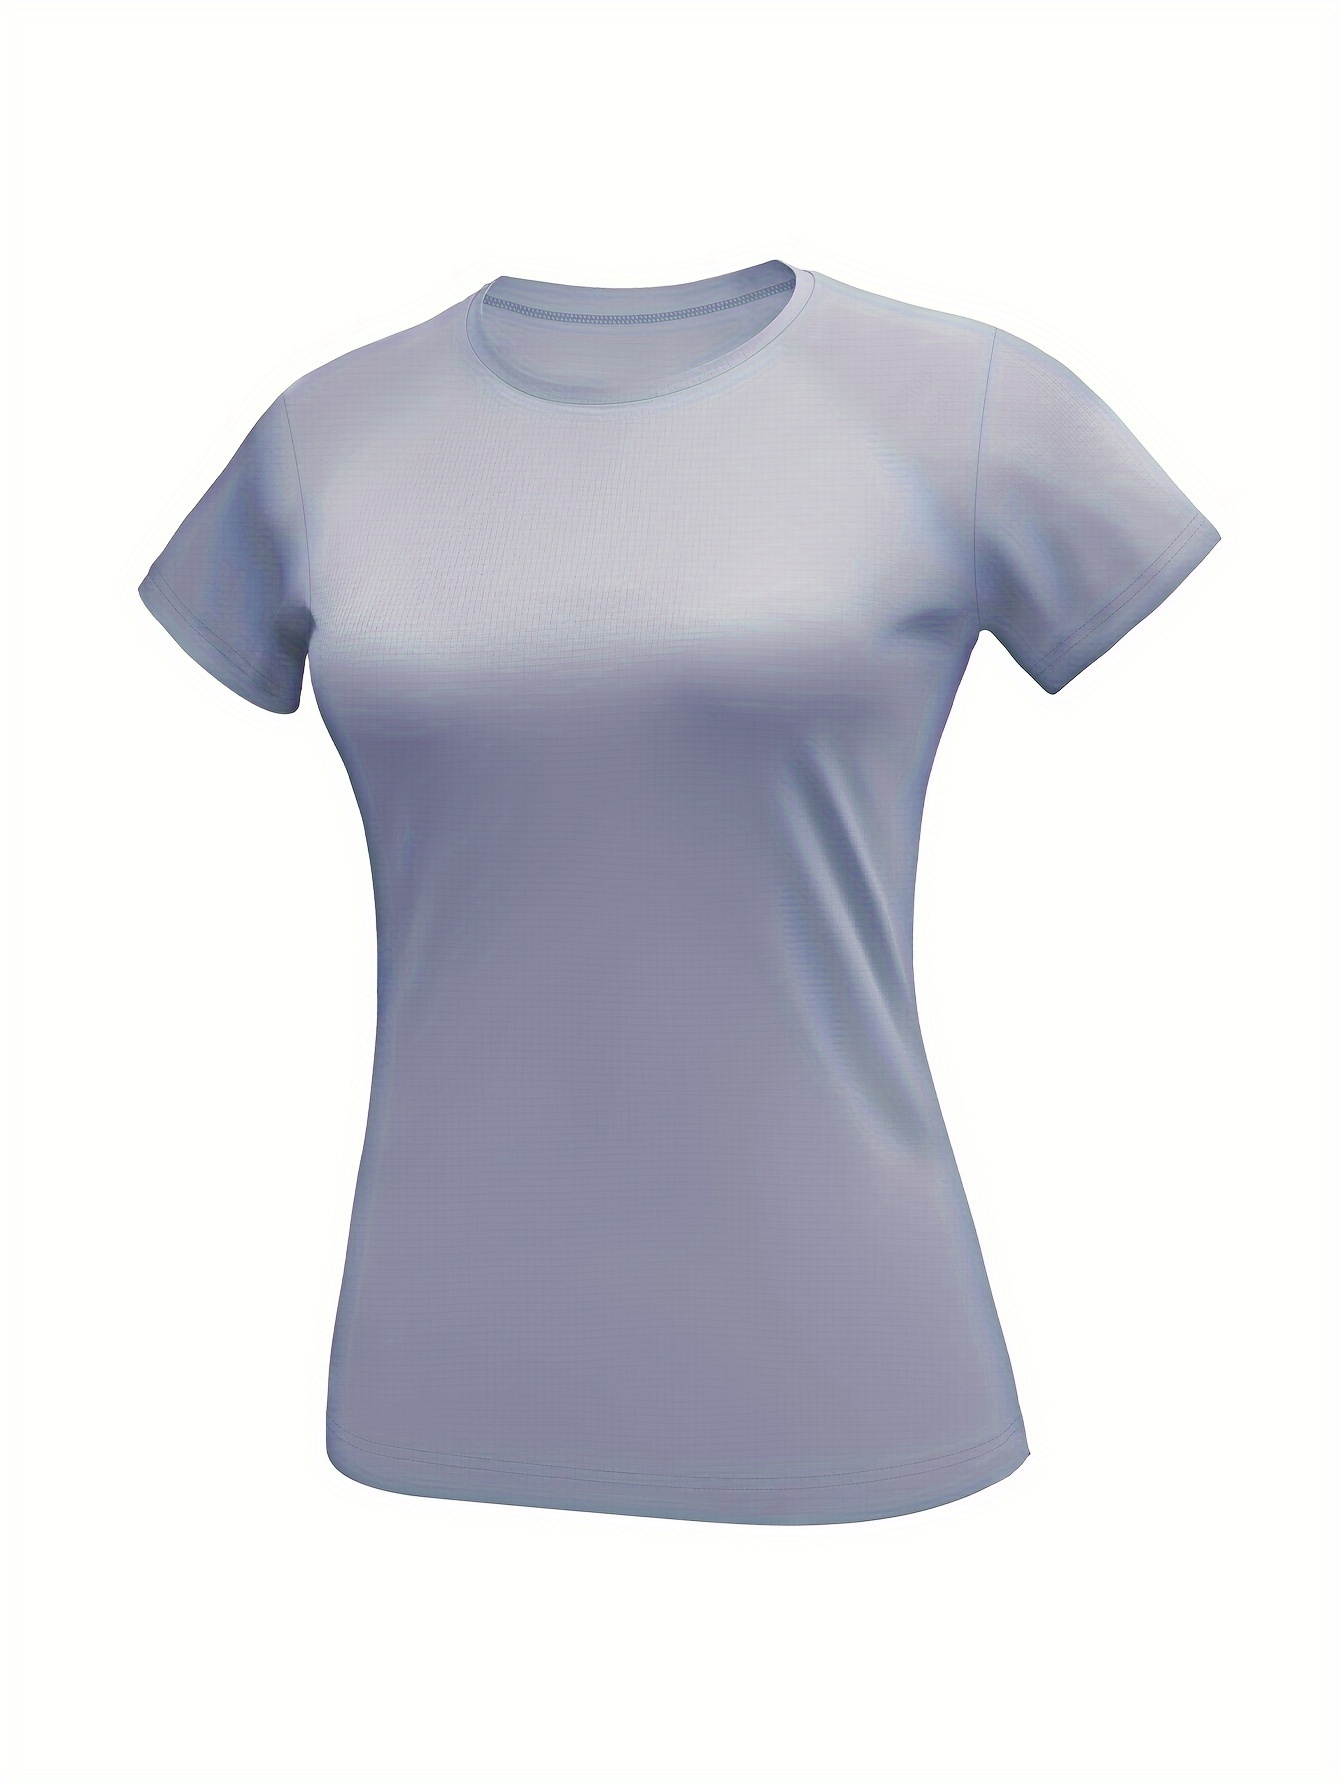 Camiseta *** De Manga Larga Con Cuello Redondo De Secado Rápido, Camiseta  Deportiva Para Correr, Yoga, Ropa Deportiva Para Mujer